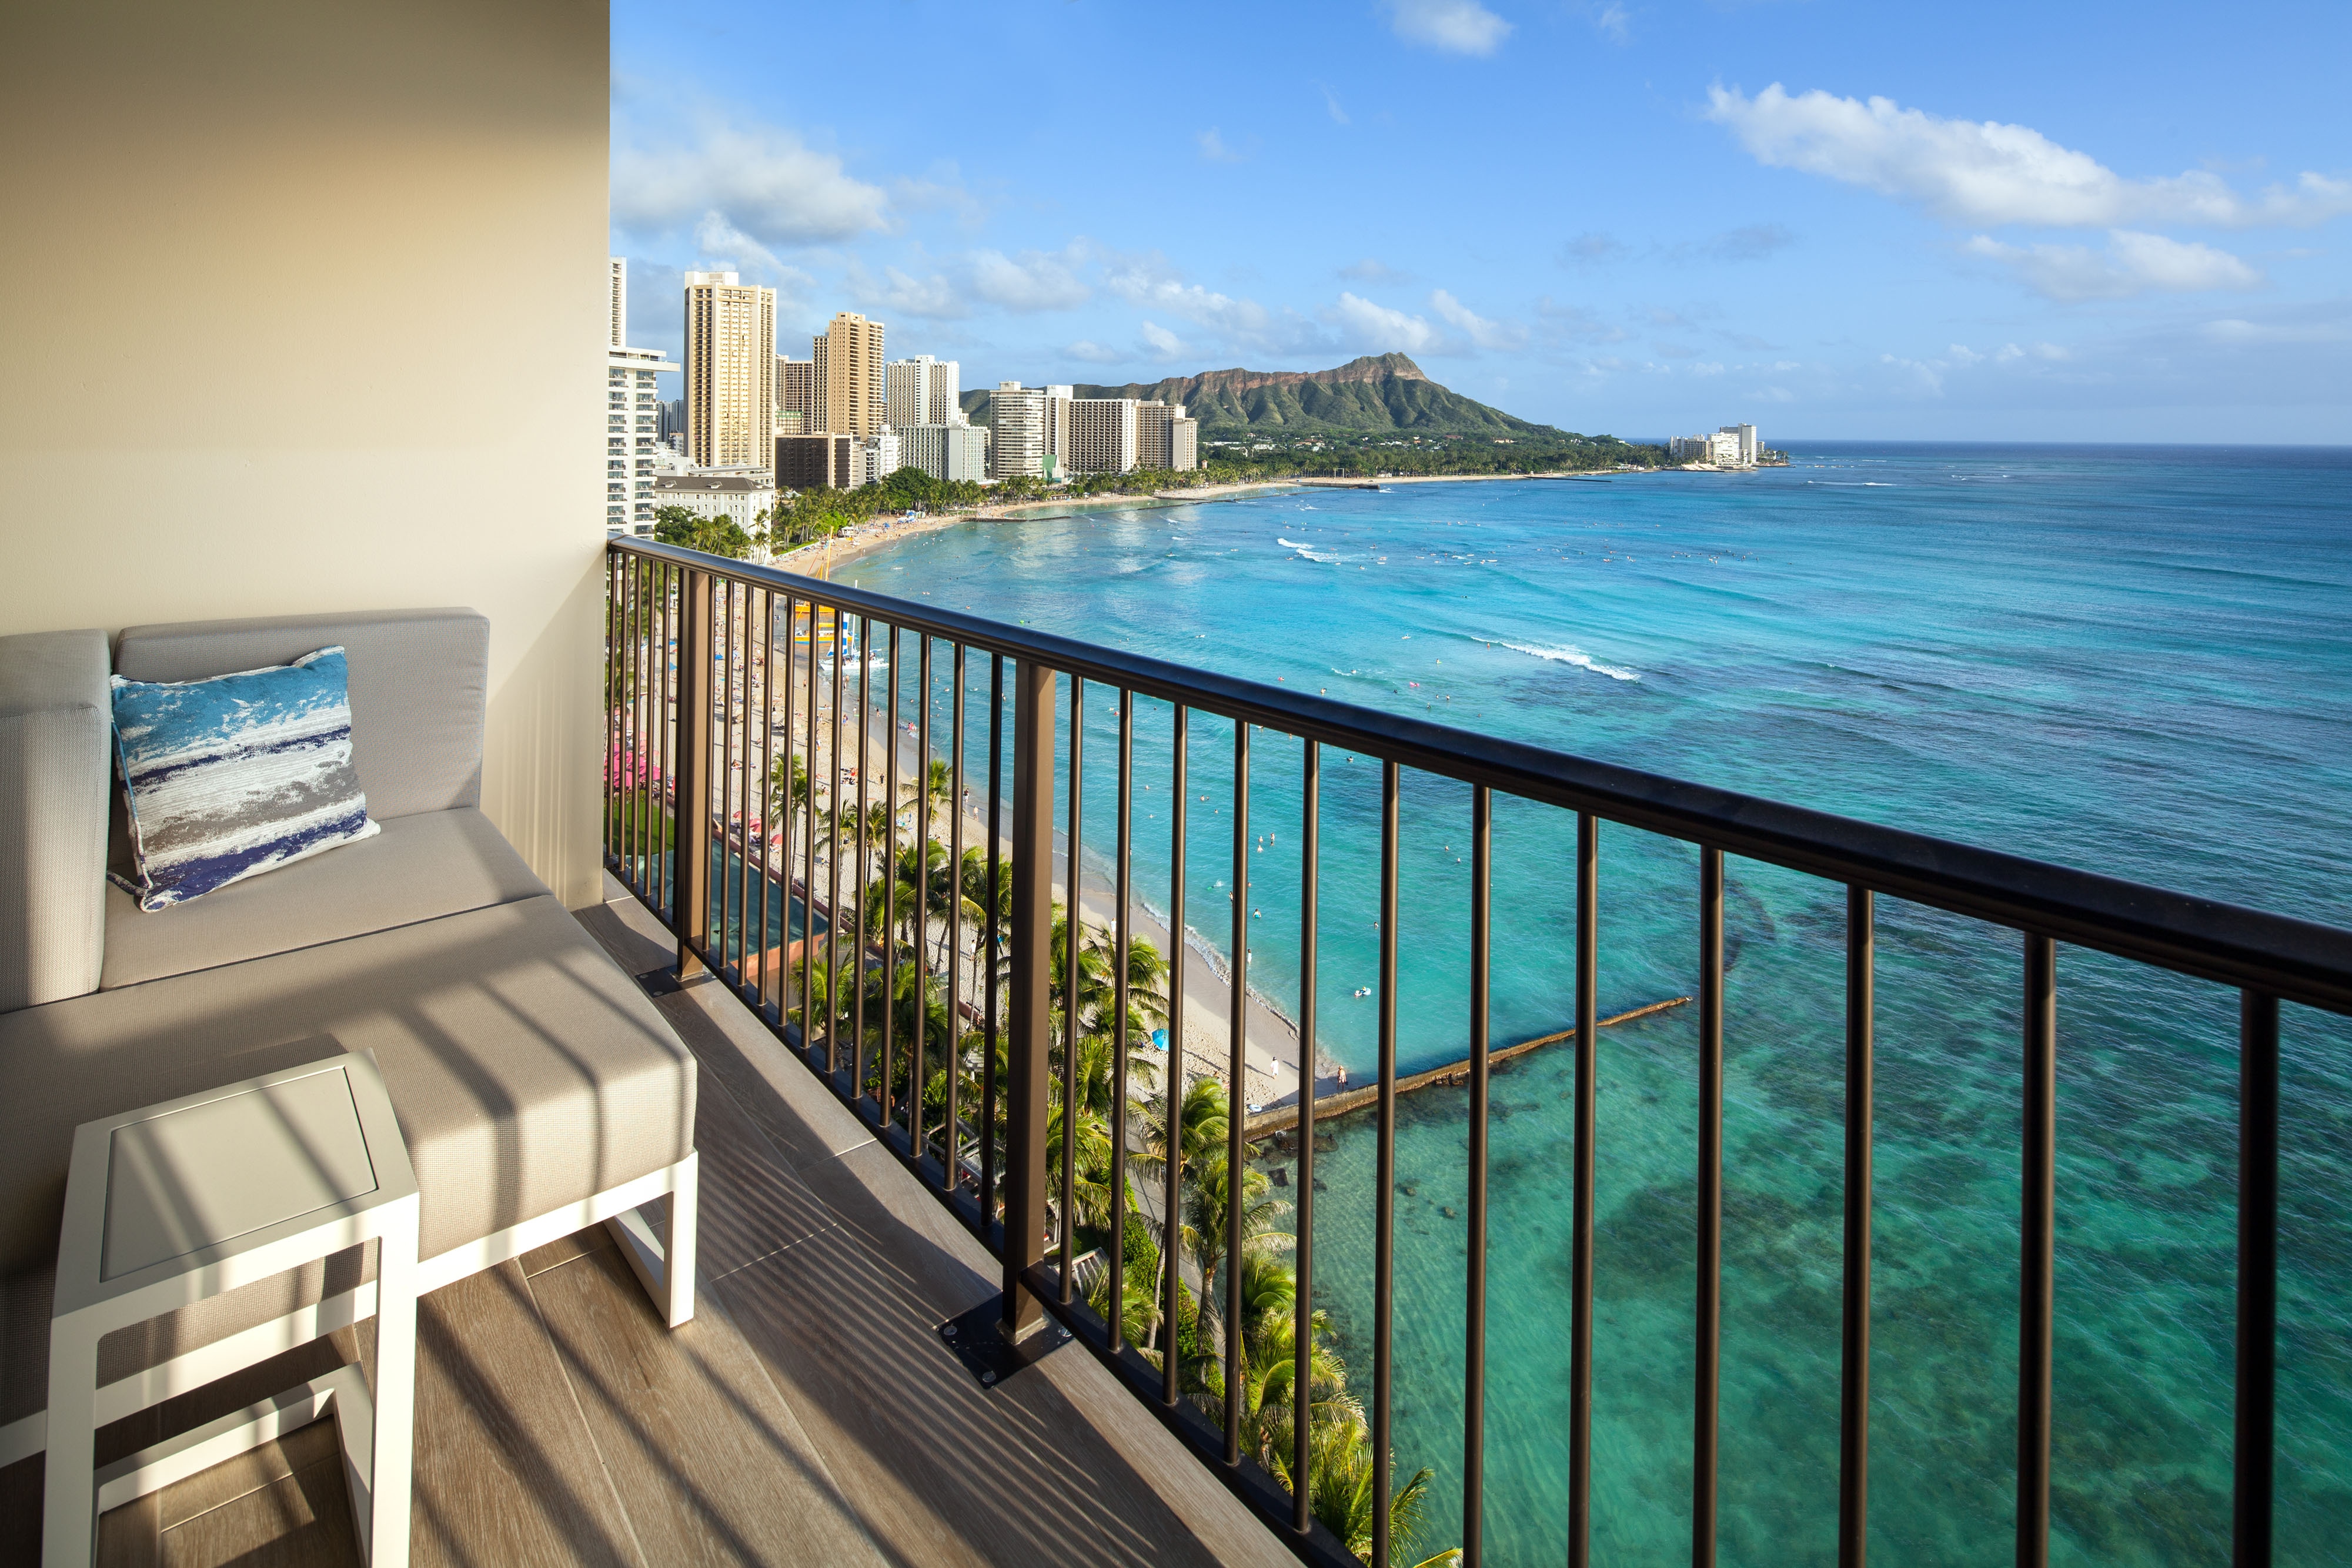 Room overlooking the beautiful scenery of Waikiki Beach